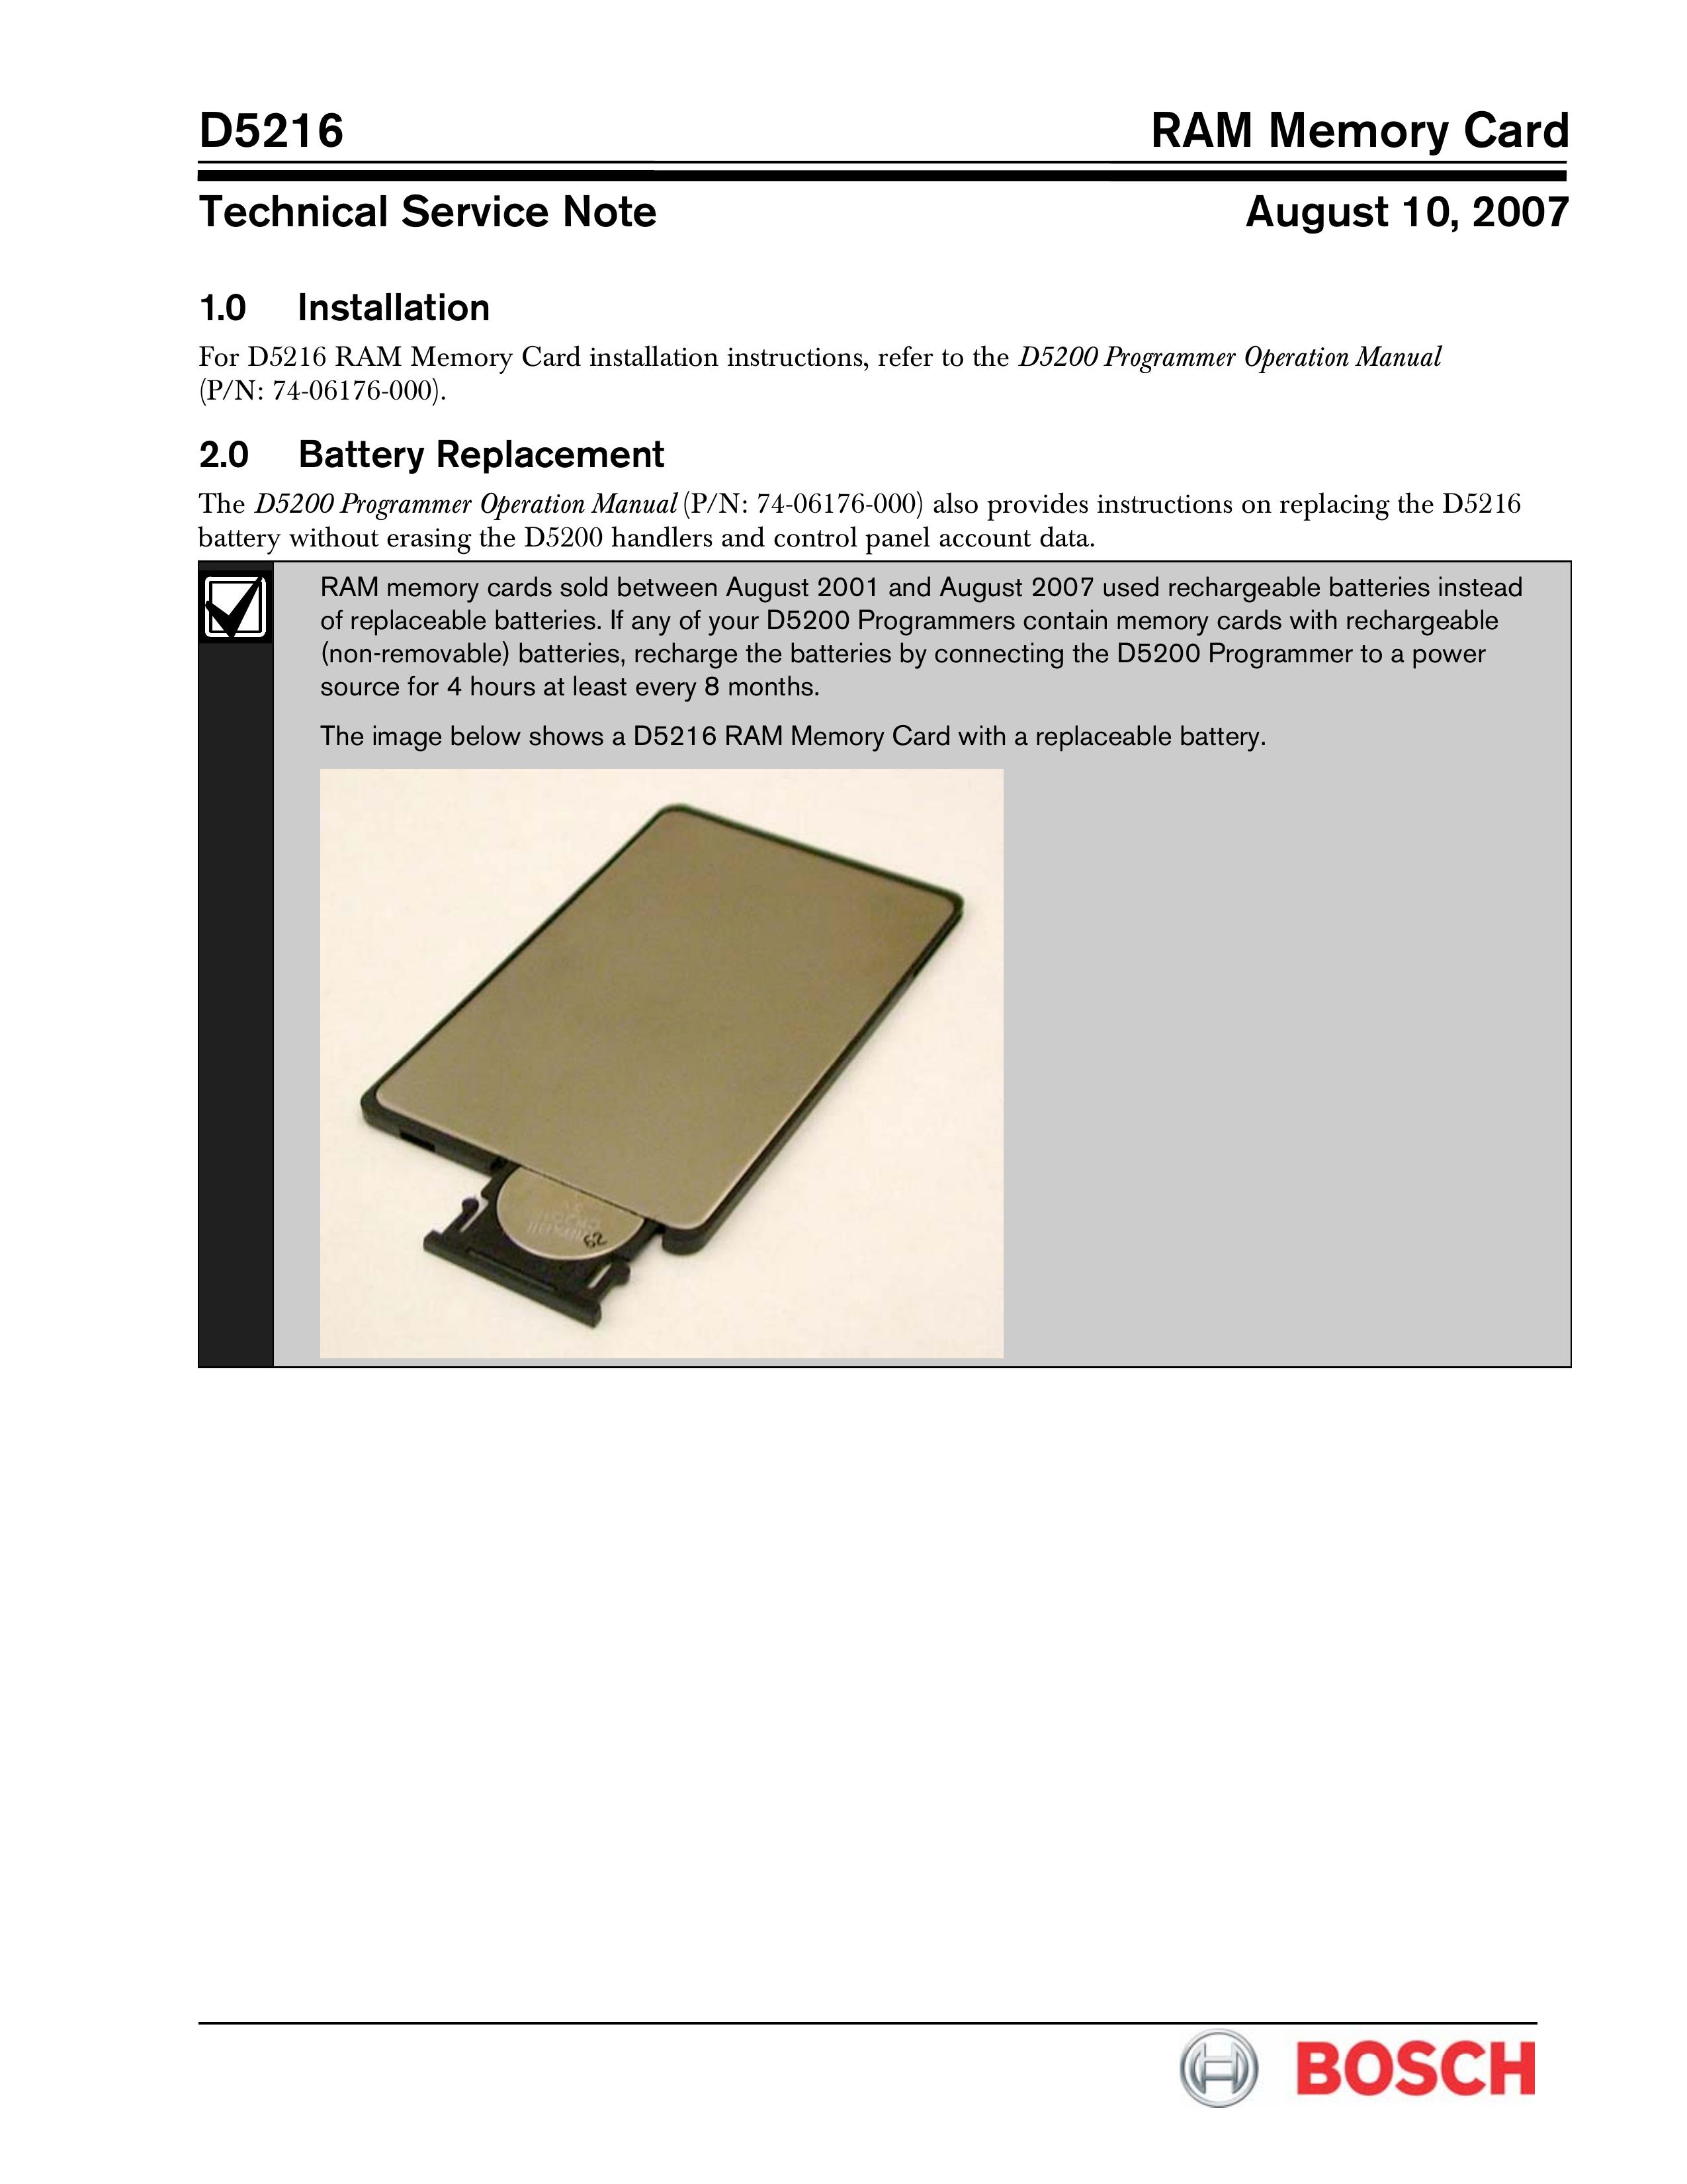 Bosch Appliances D5216 Camera Accessories User Manual